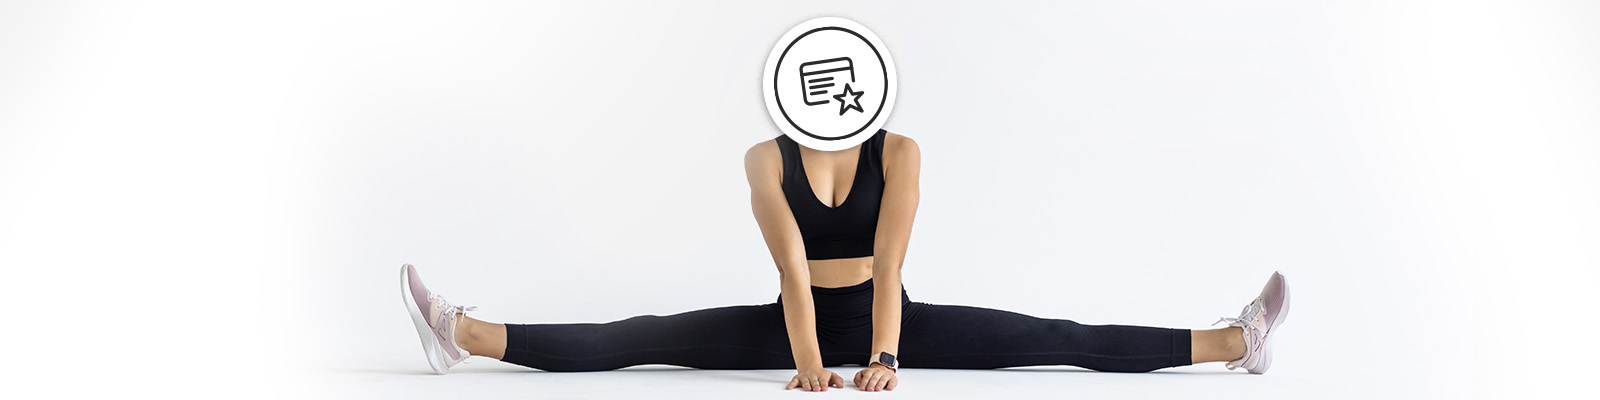 headless woman doing flexible yoga